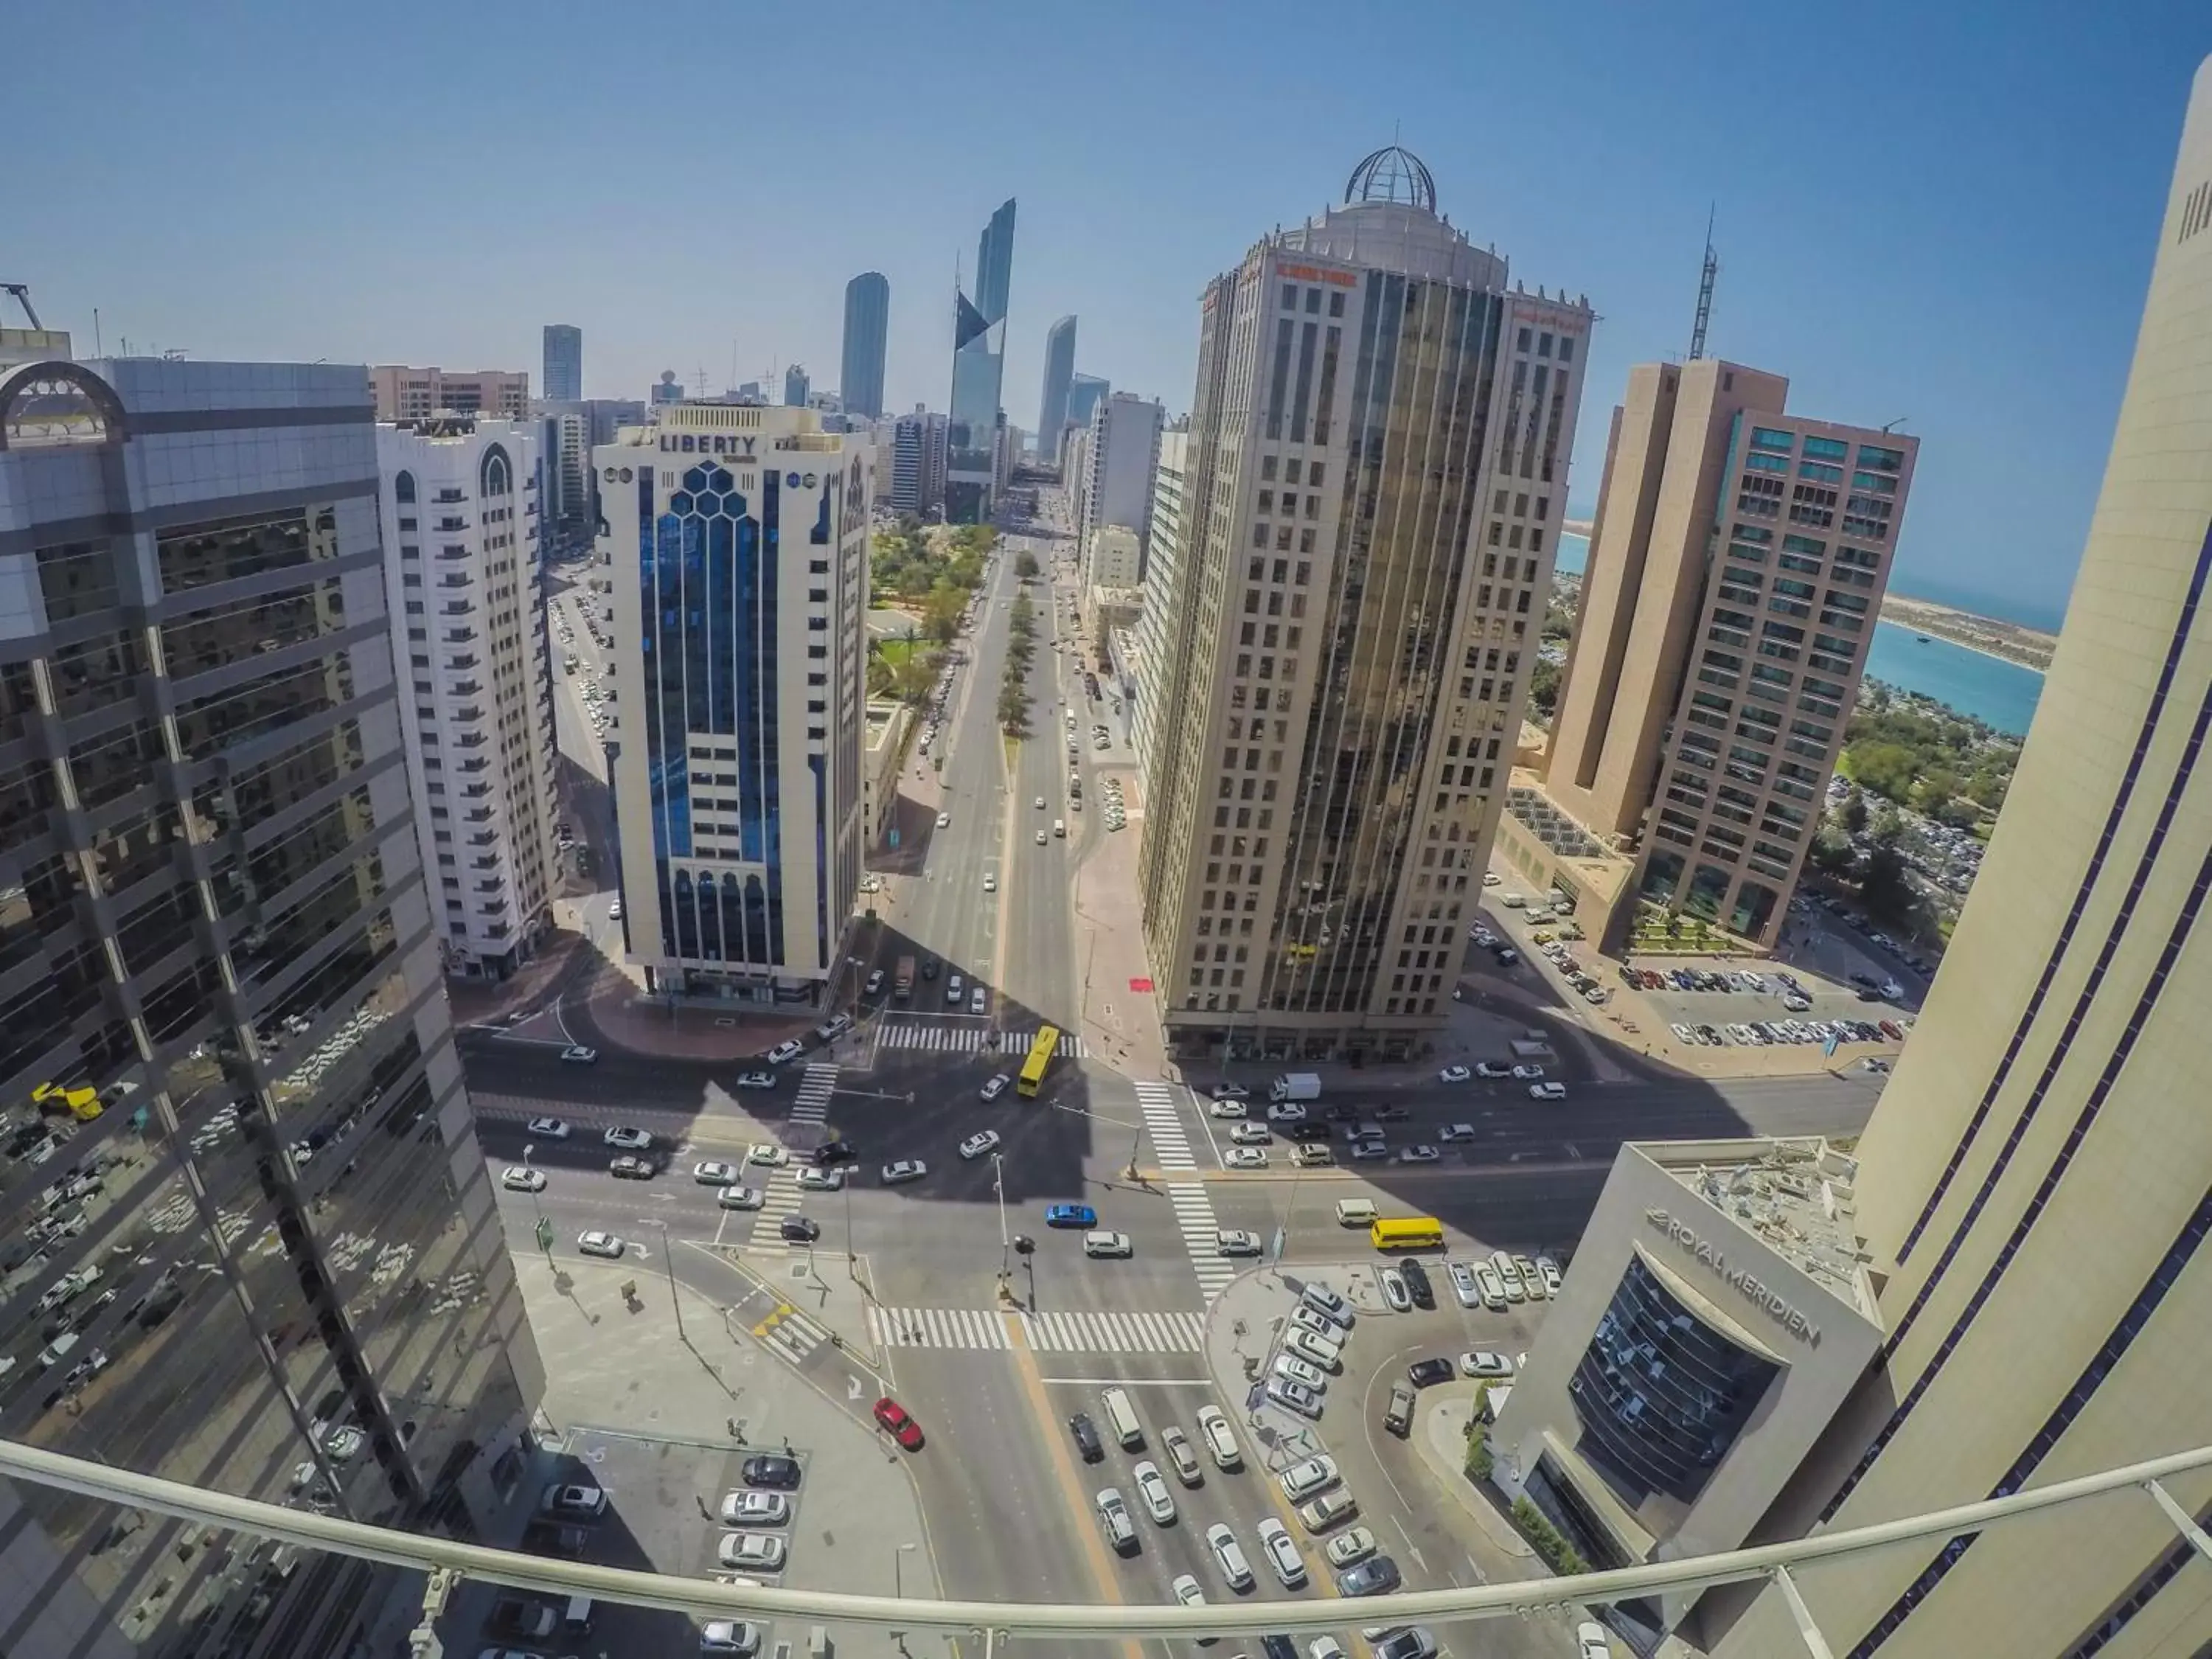 Bird's eye view in TRYP by Wyndham Abu Dhabi City Center